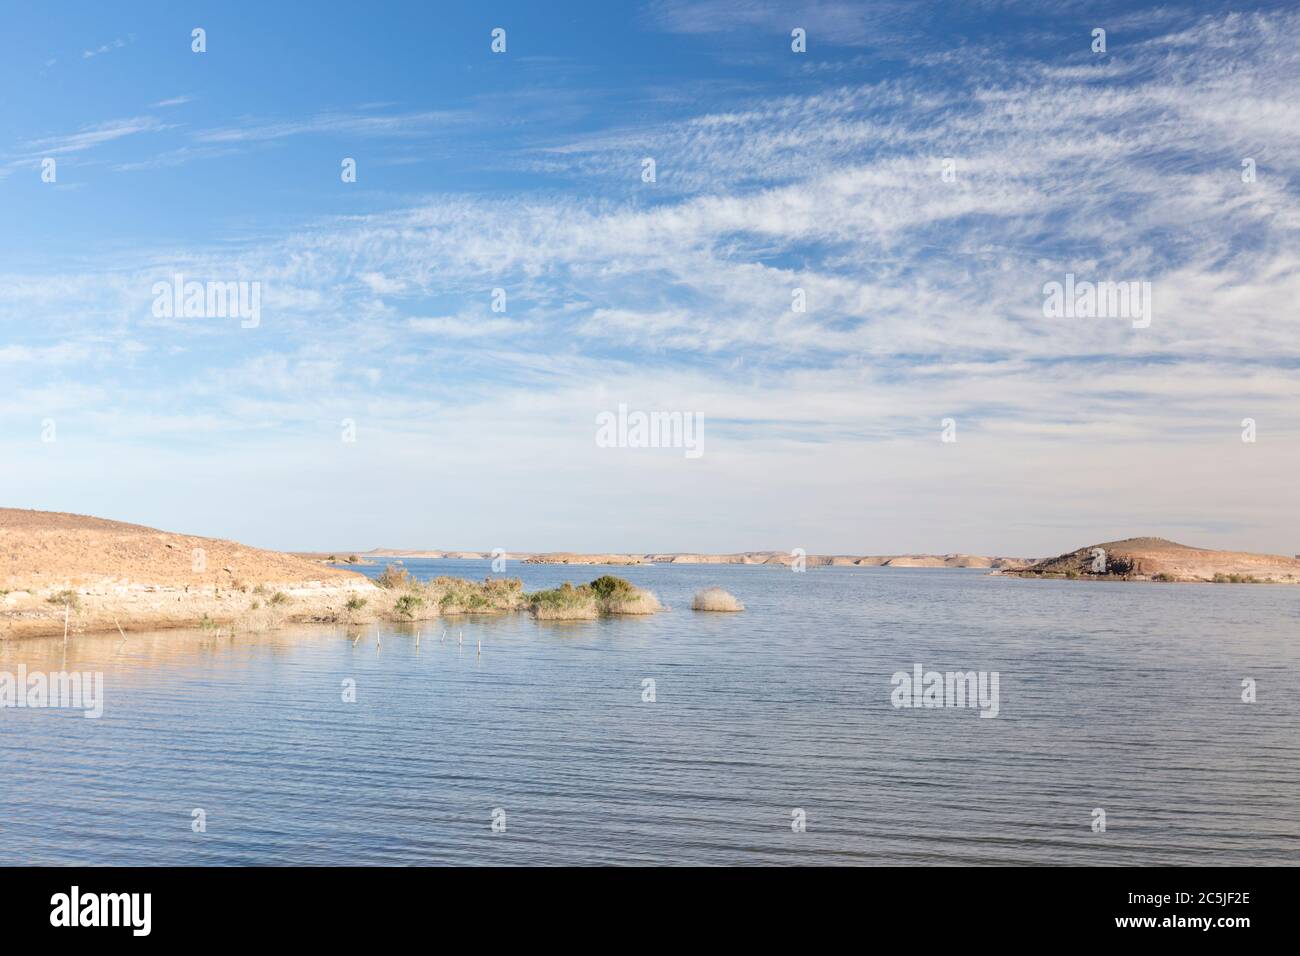 Lake Nasser in Abu Simbel, Egypt Stock Photo